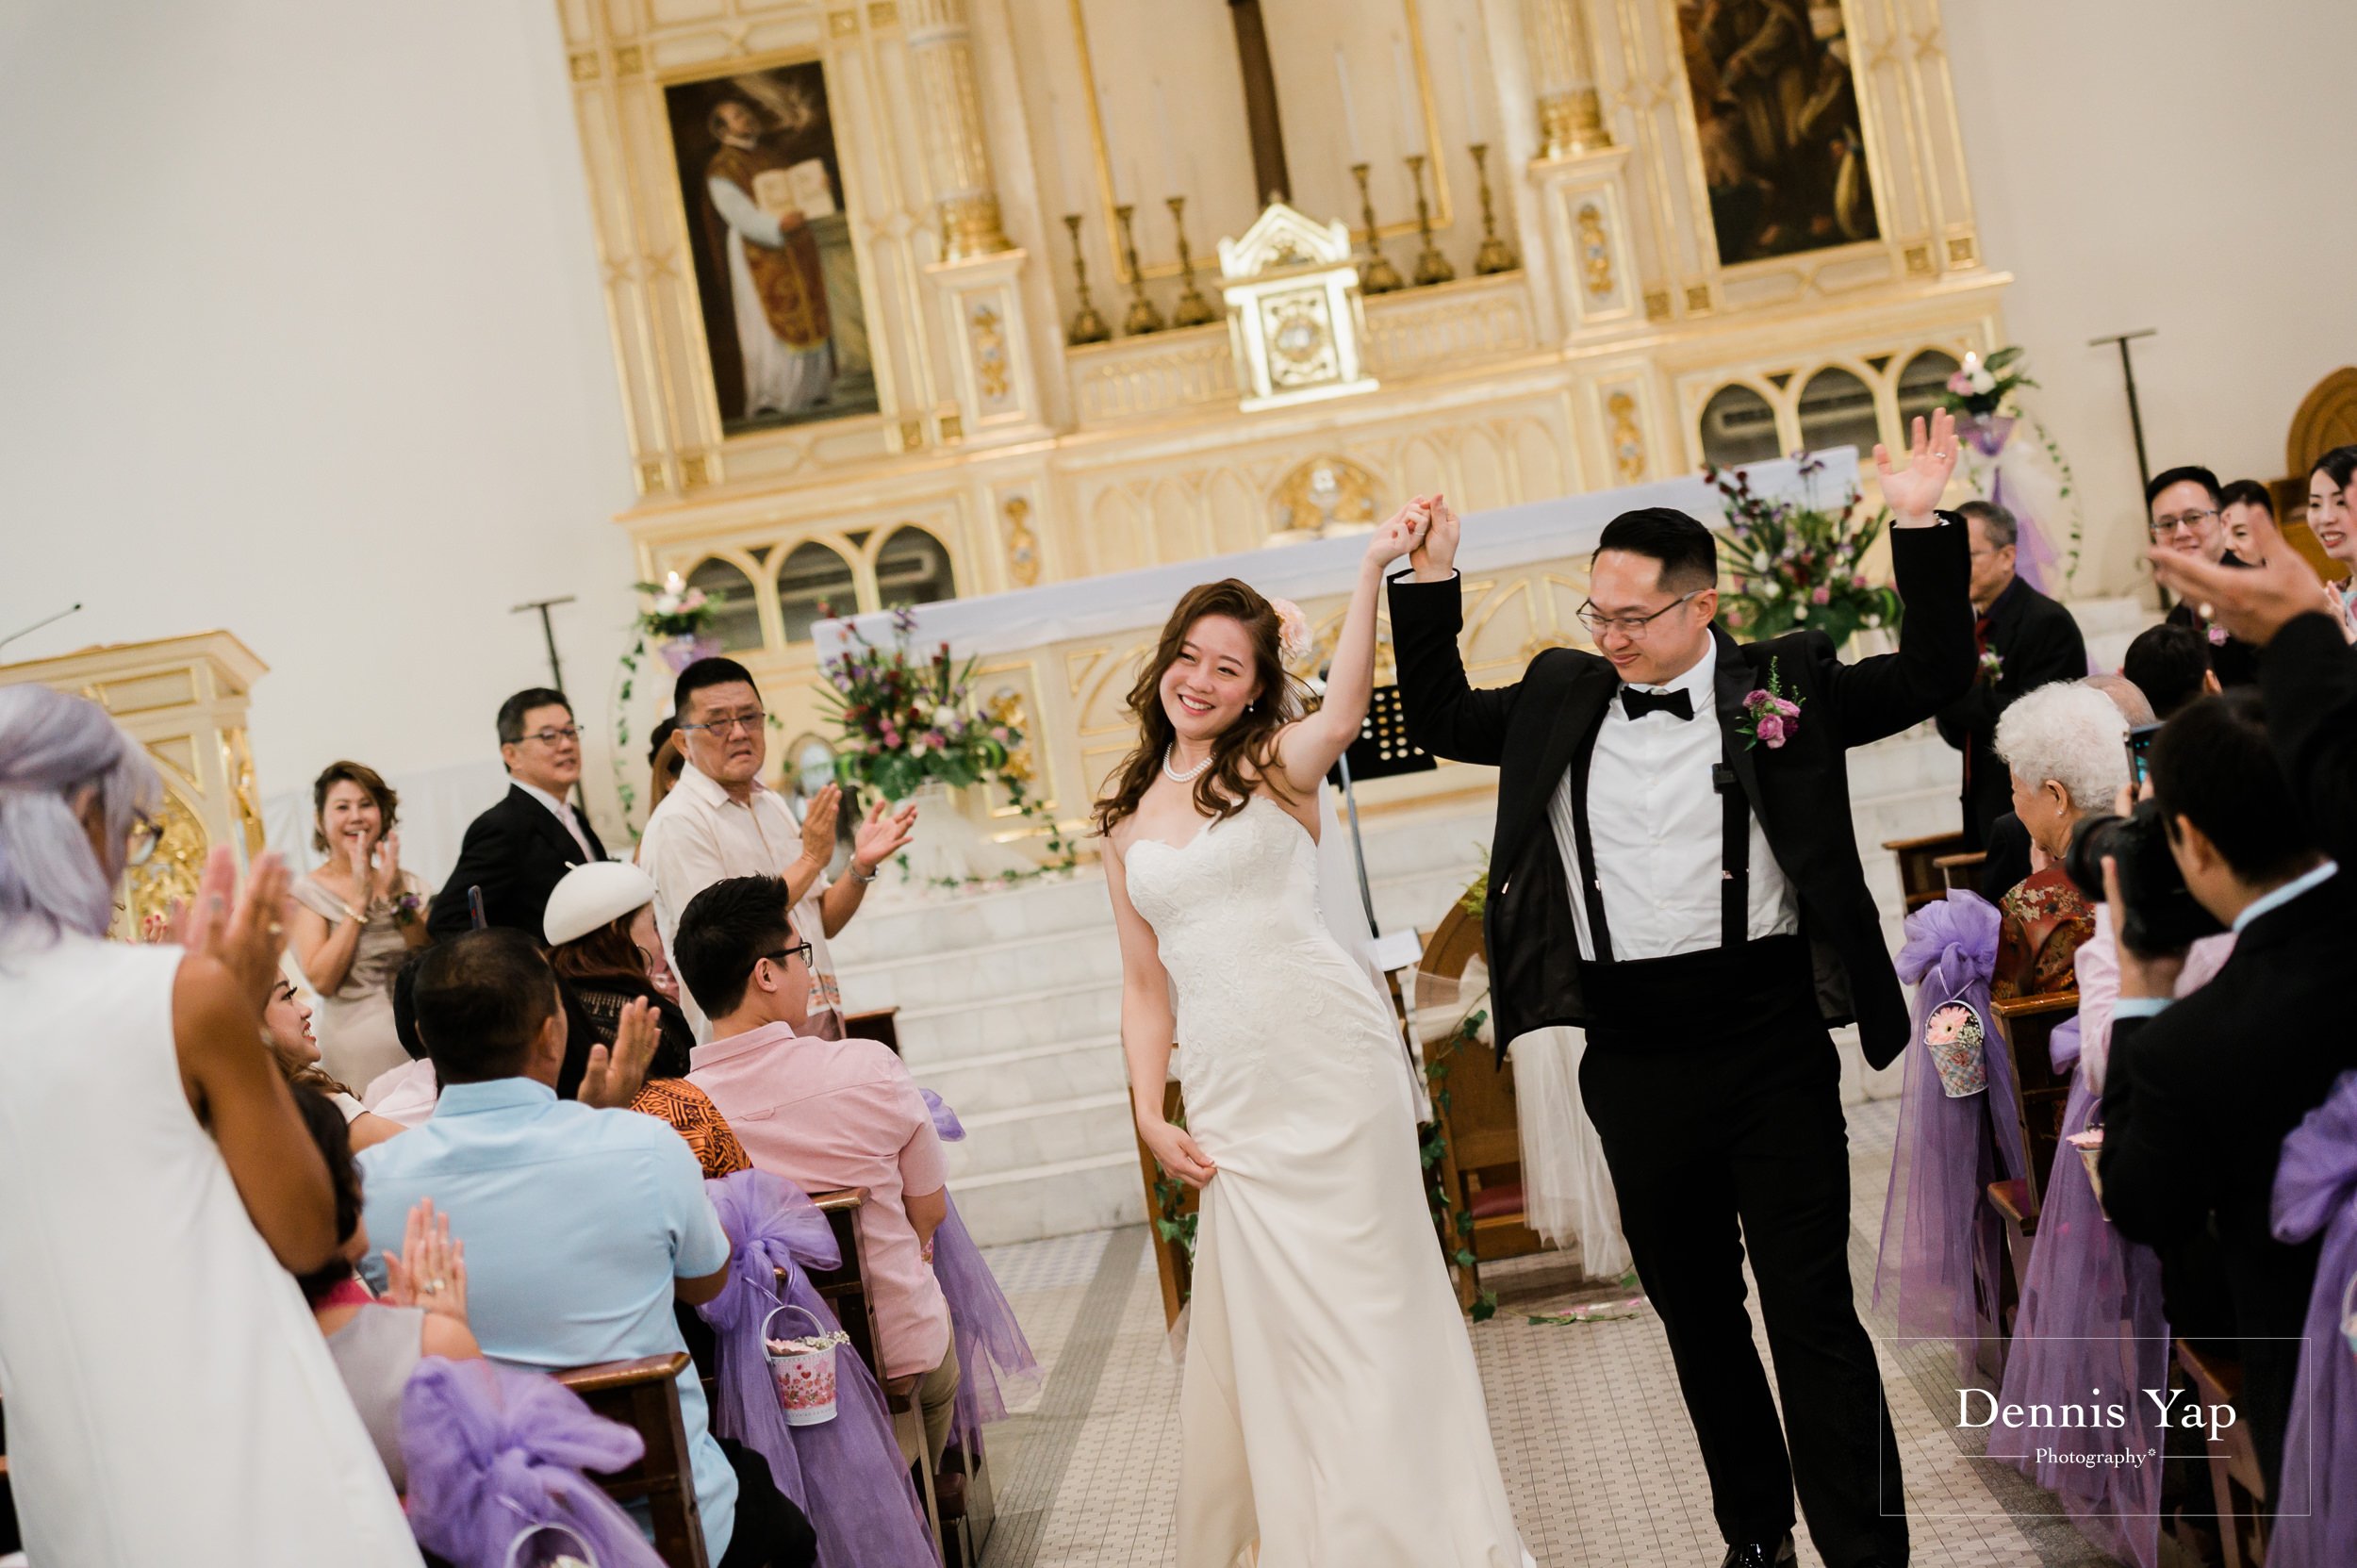 reuben daphne church wedding st francis xavier kuala lumpur dennis yap photography-35.jpg